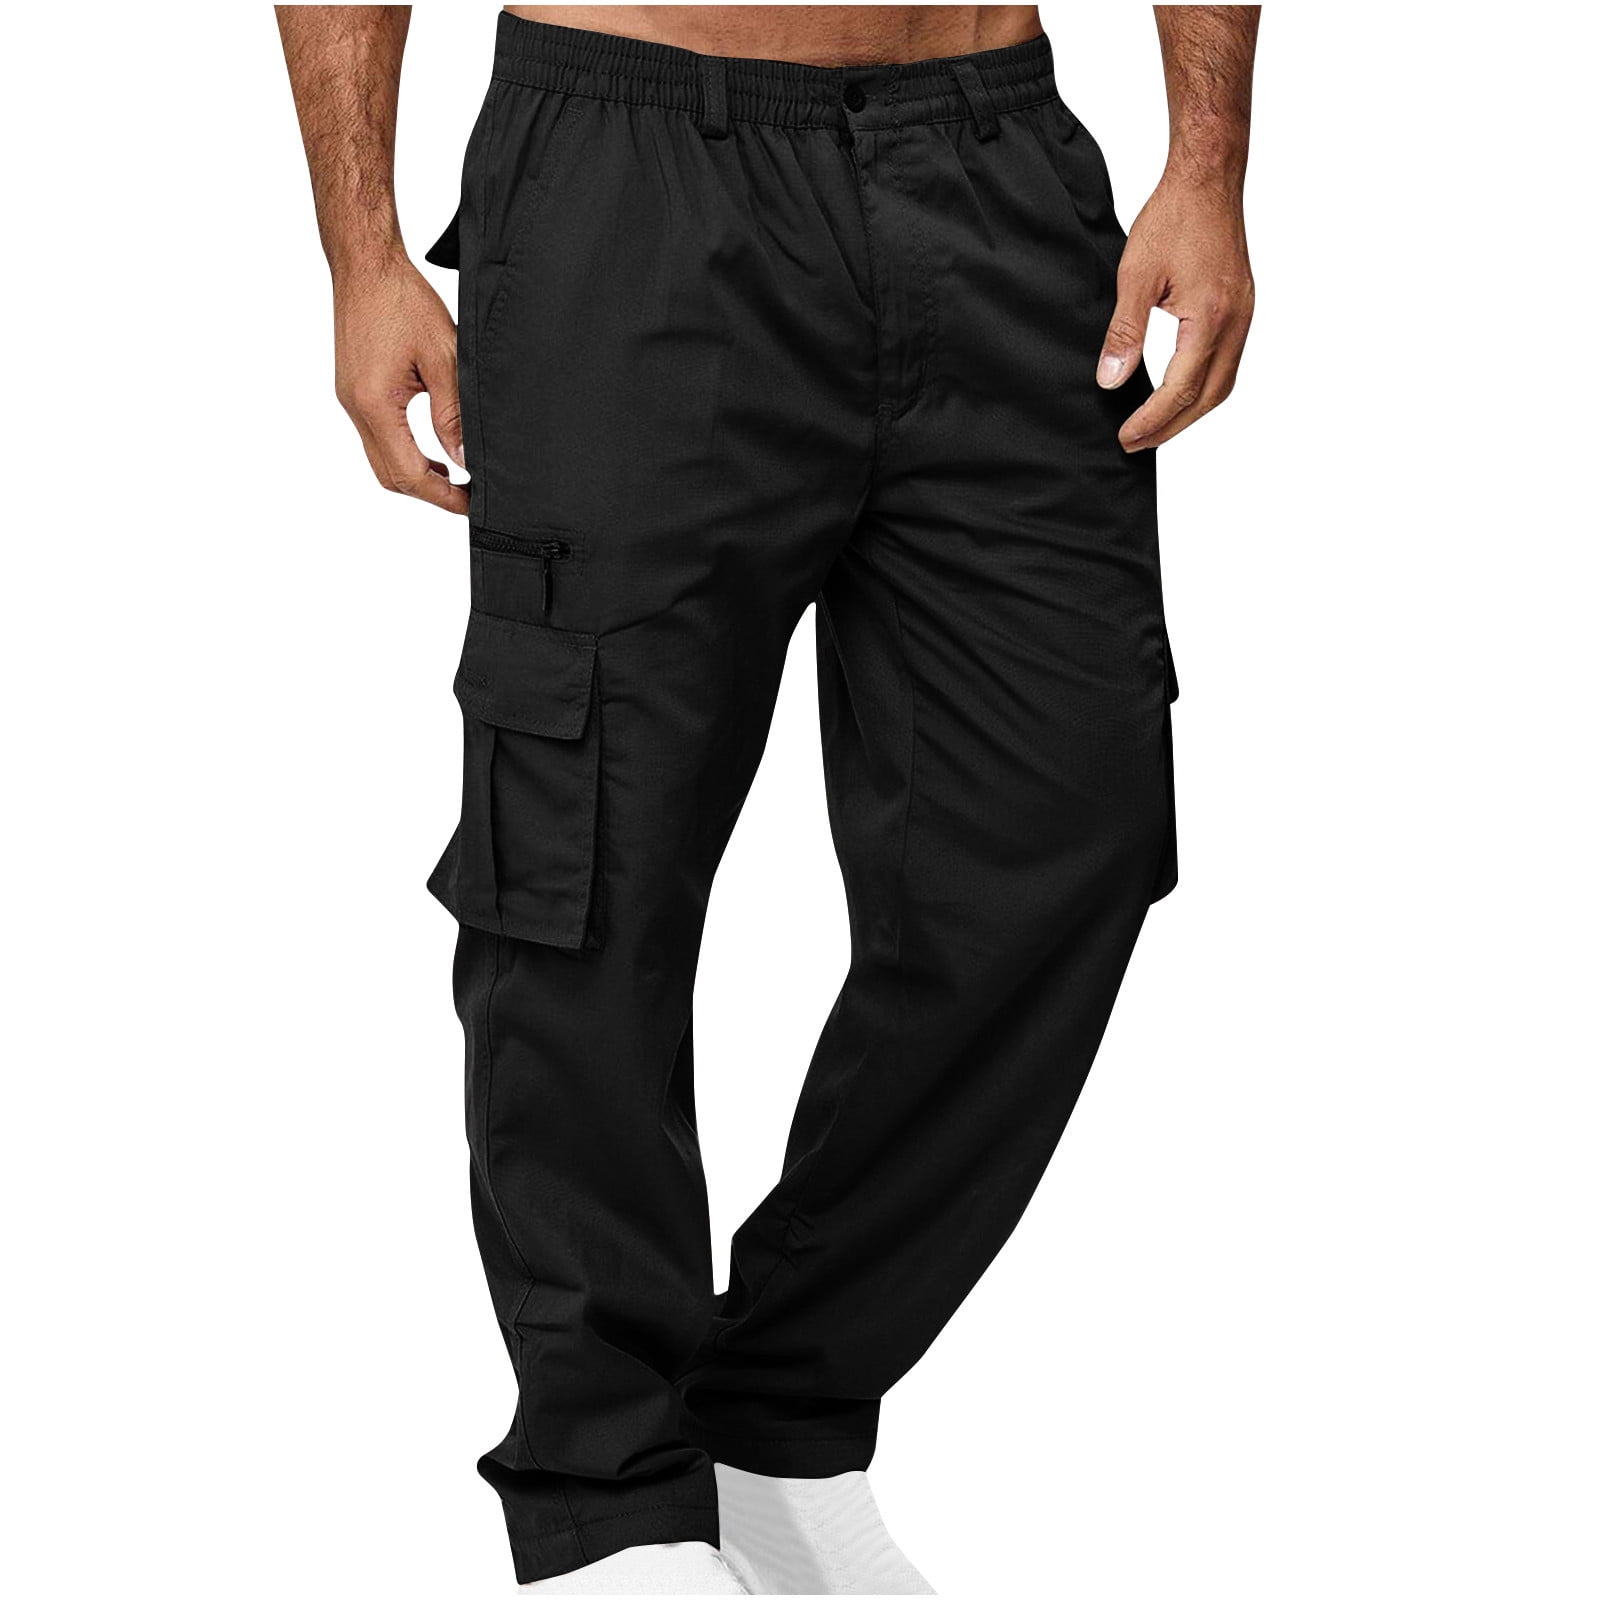 amelAEA Men's Casual Cargo Pants Outdoor Hiking Pants Work Pants with ...